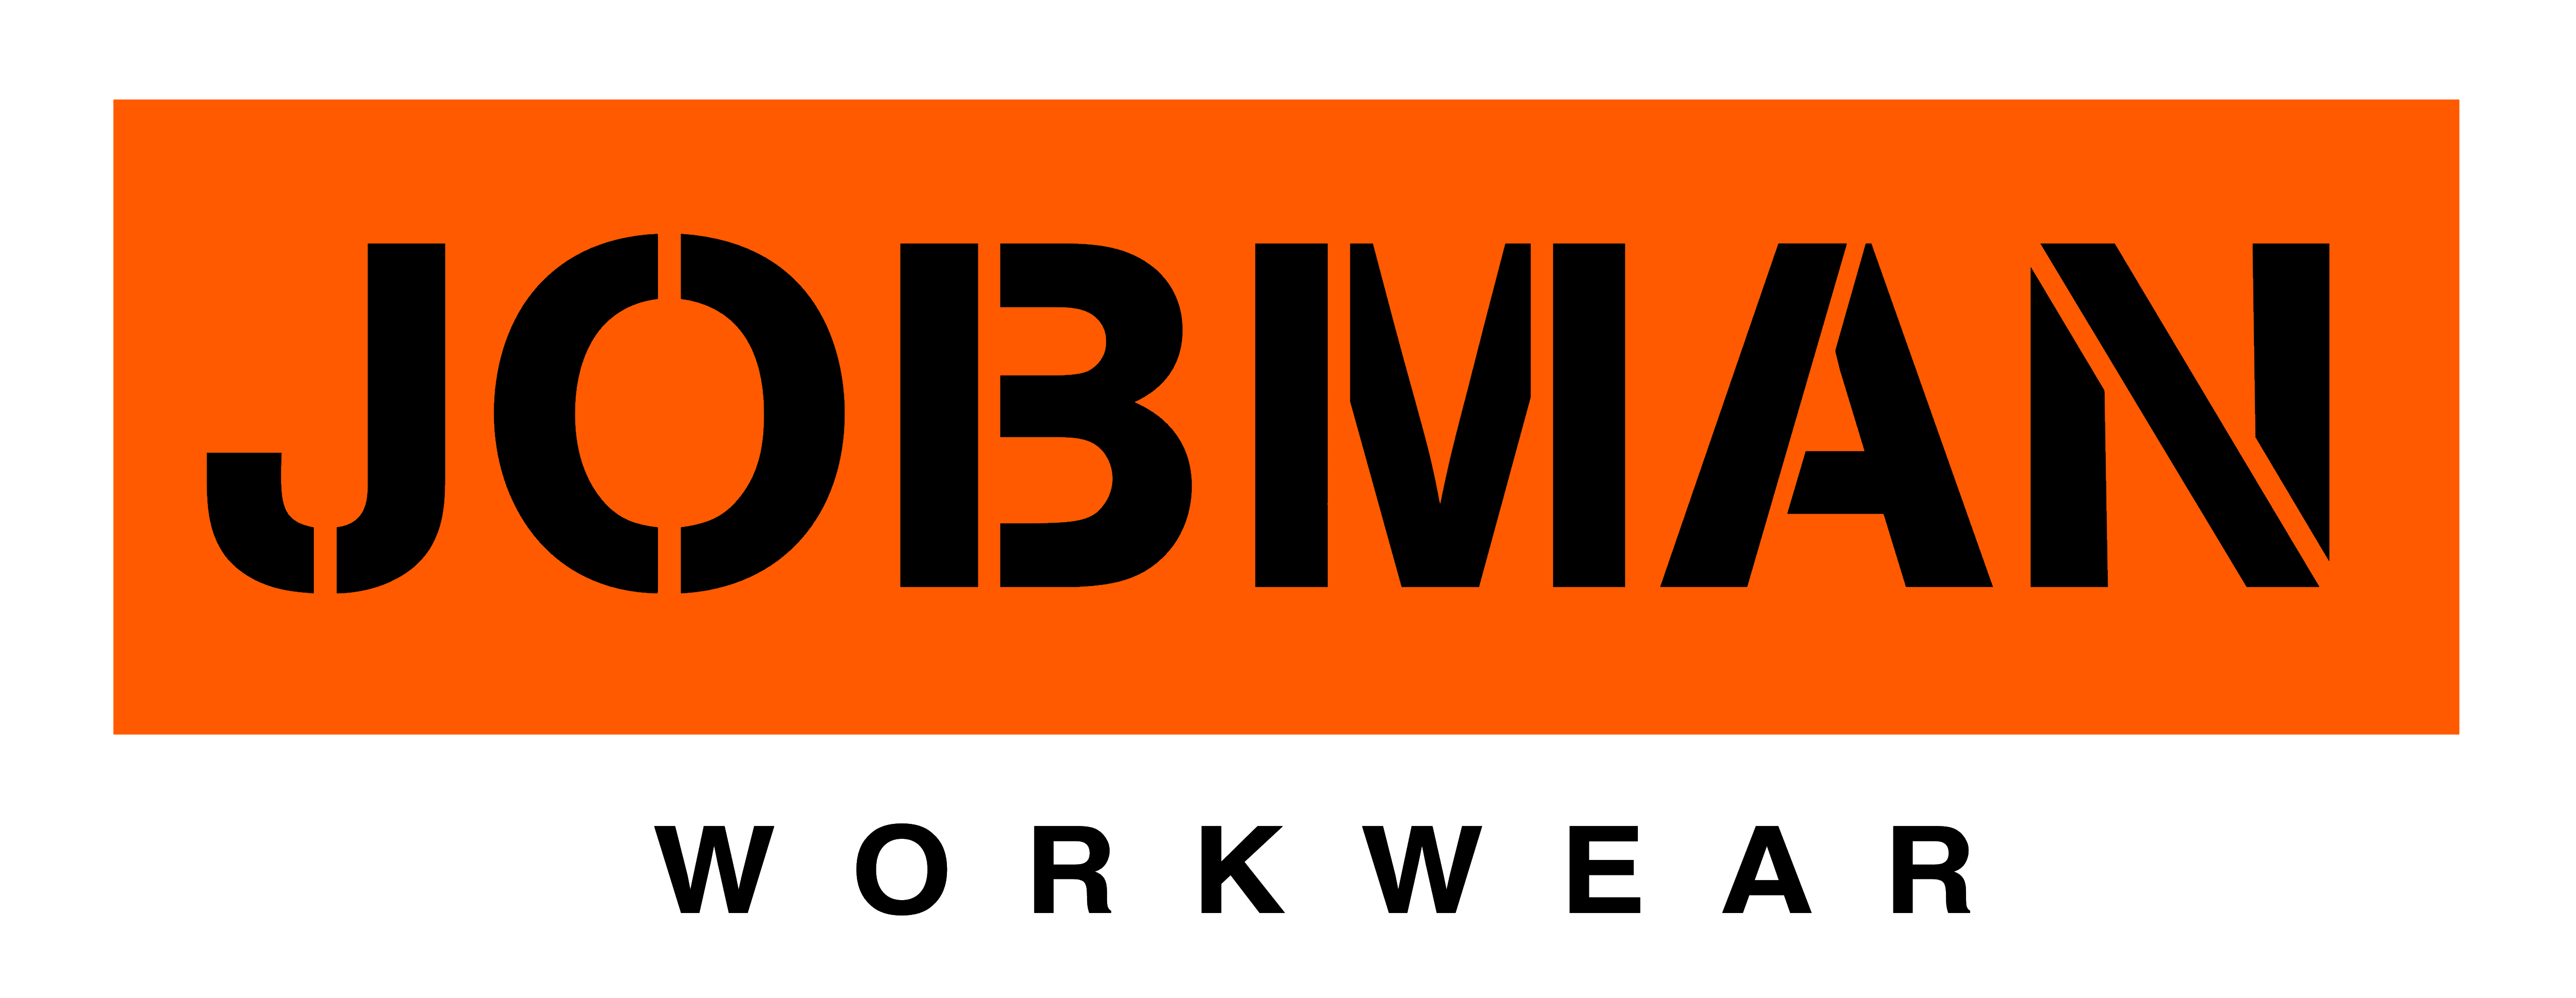 jobmab_logo-min.png